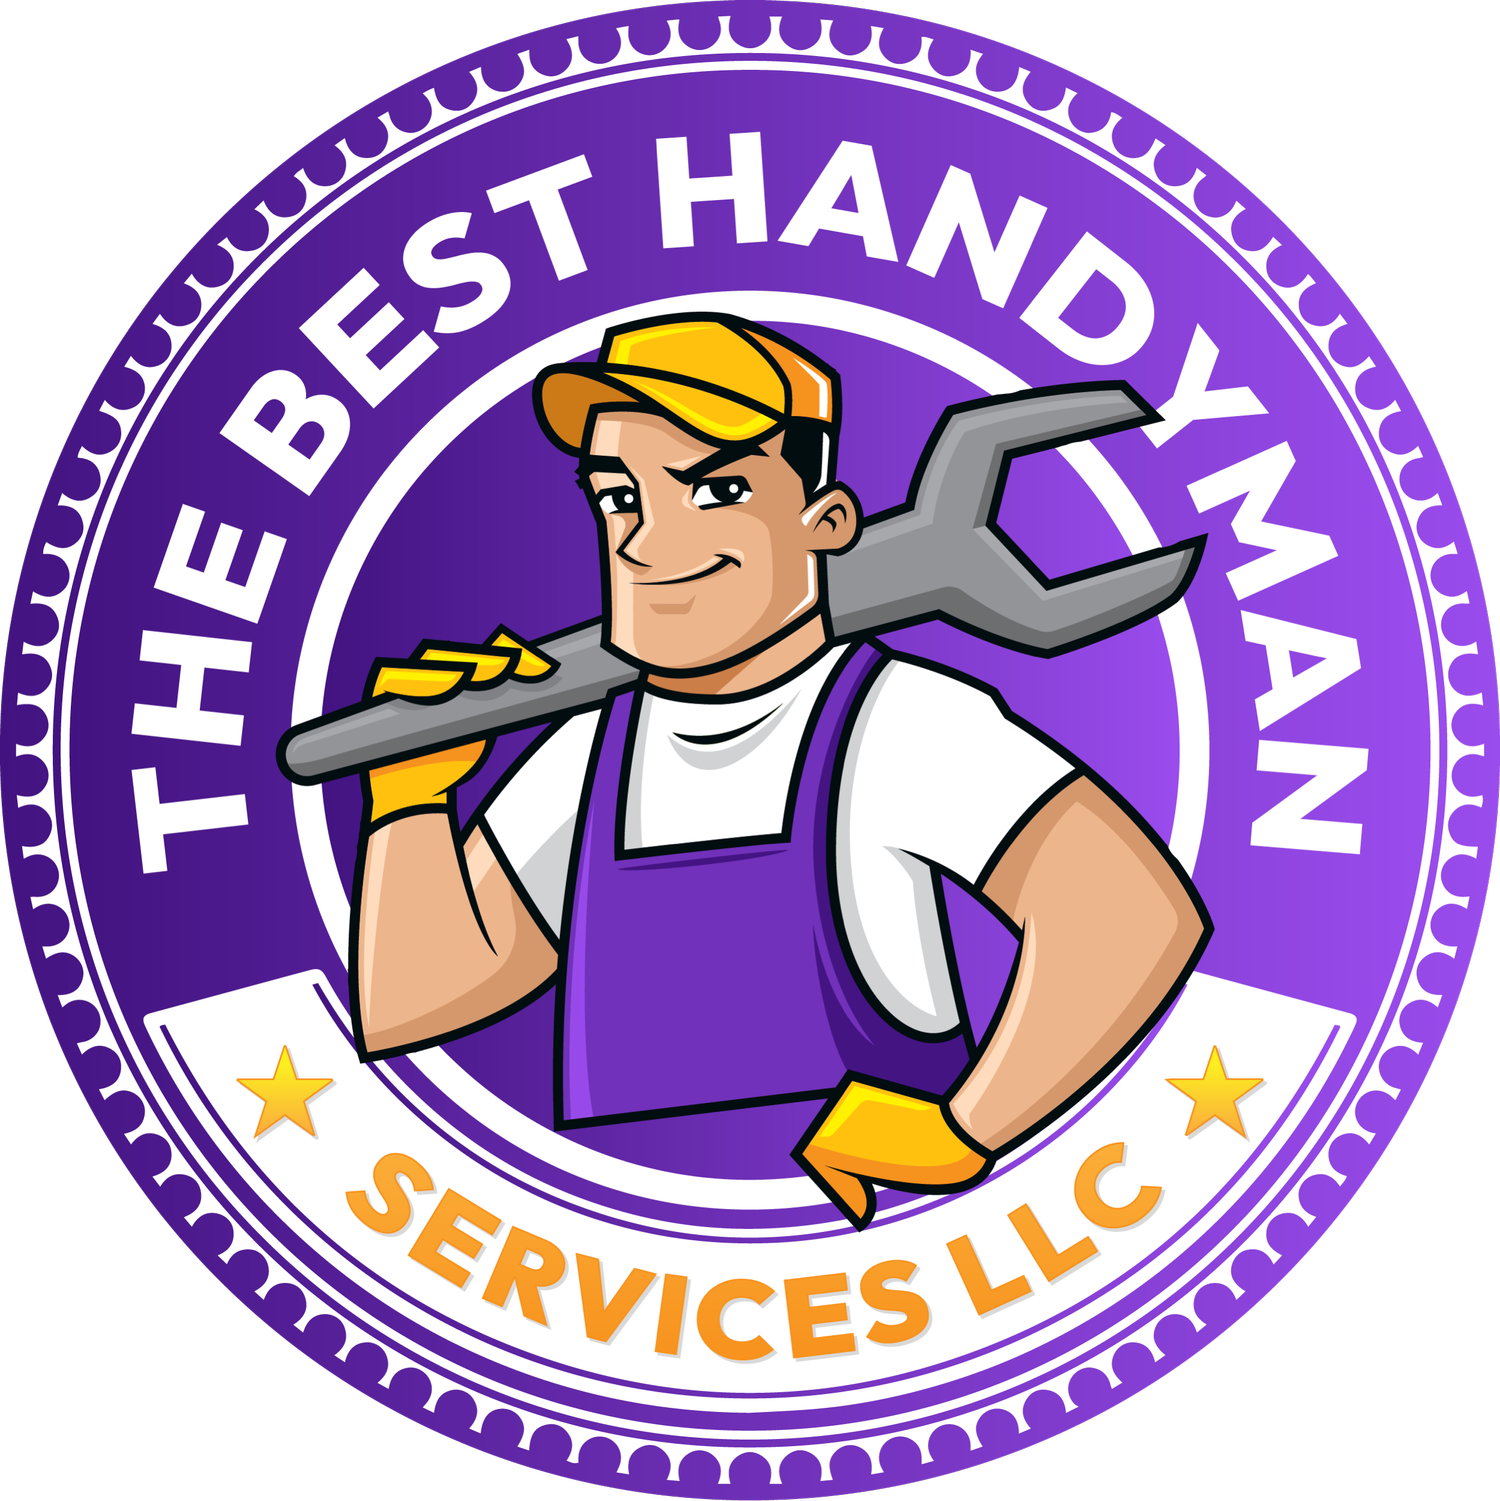 The Best Handyman 